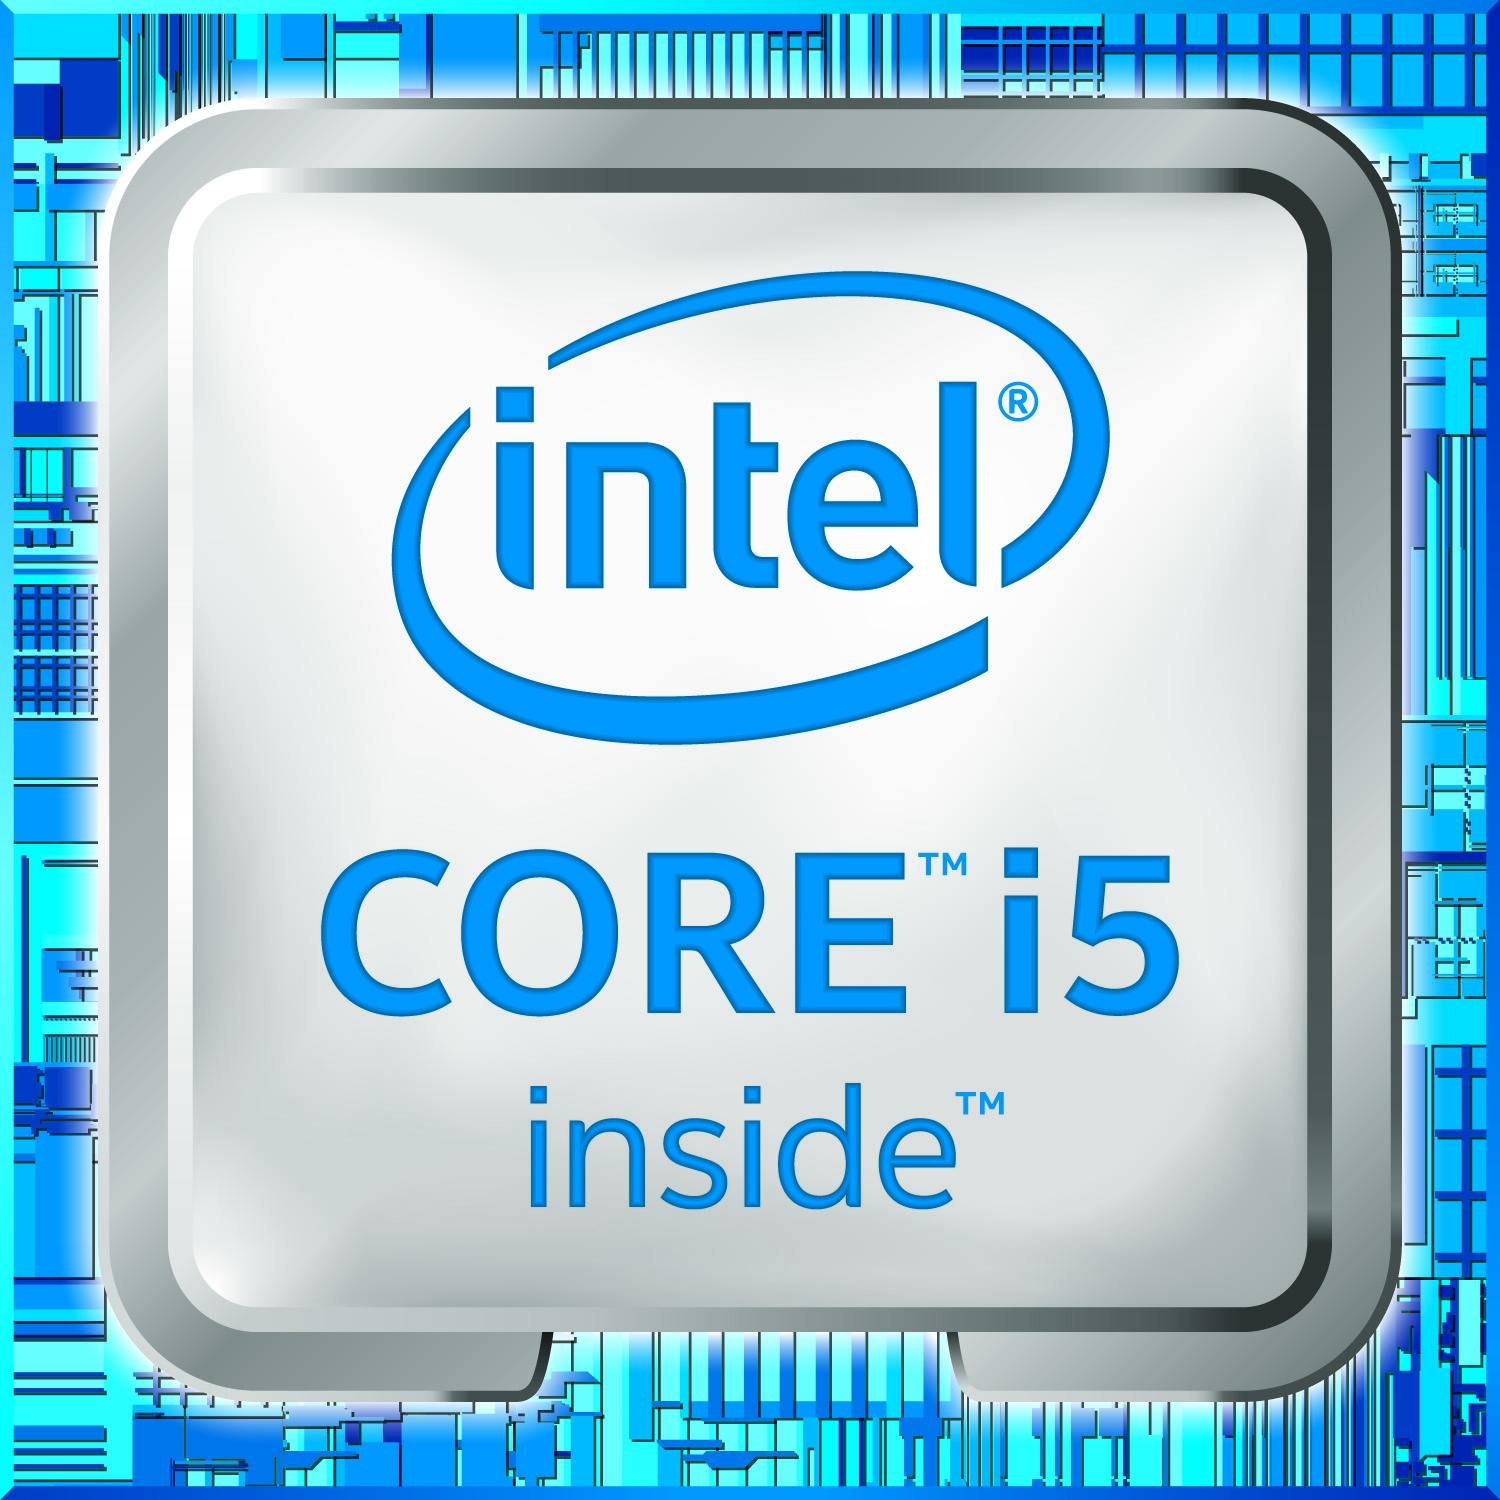 Процессор Intel Core i5 6500, Socket 1151, 4-ядерный, 3200 МГц, Turbo: 3600 МГц, Skylake-S, Кэш L2 - 1024 Кб, Кэш L3 - 6144 Кб, Intel HD Graphics 530,